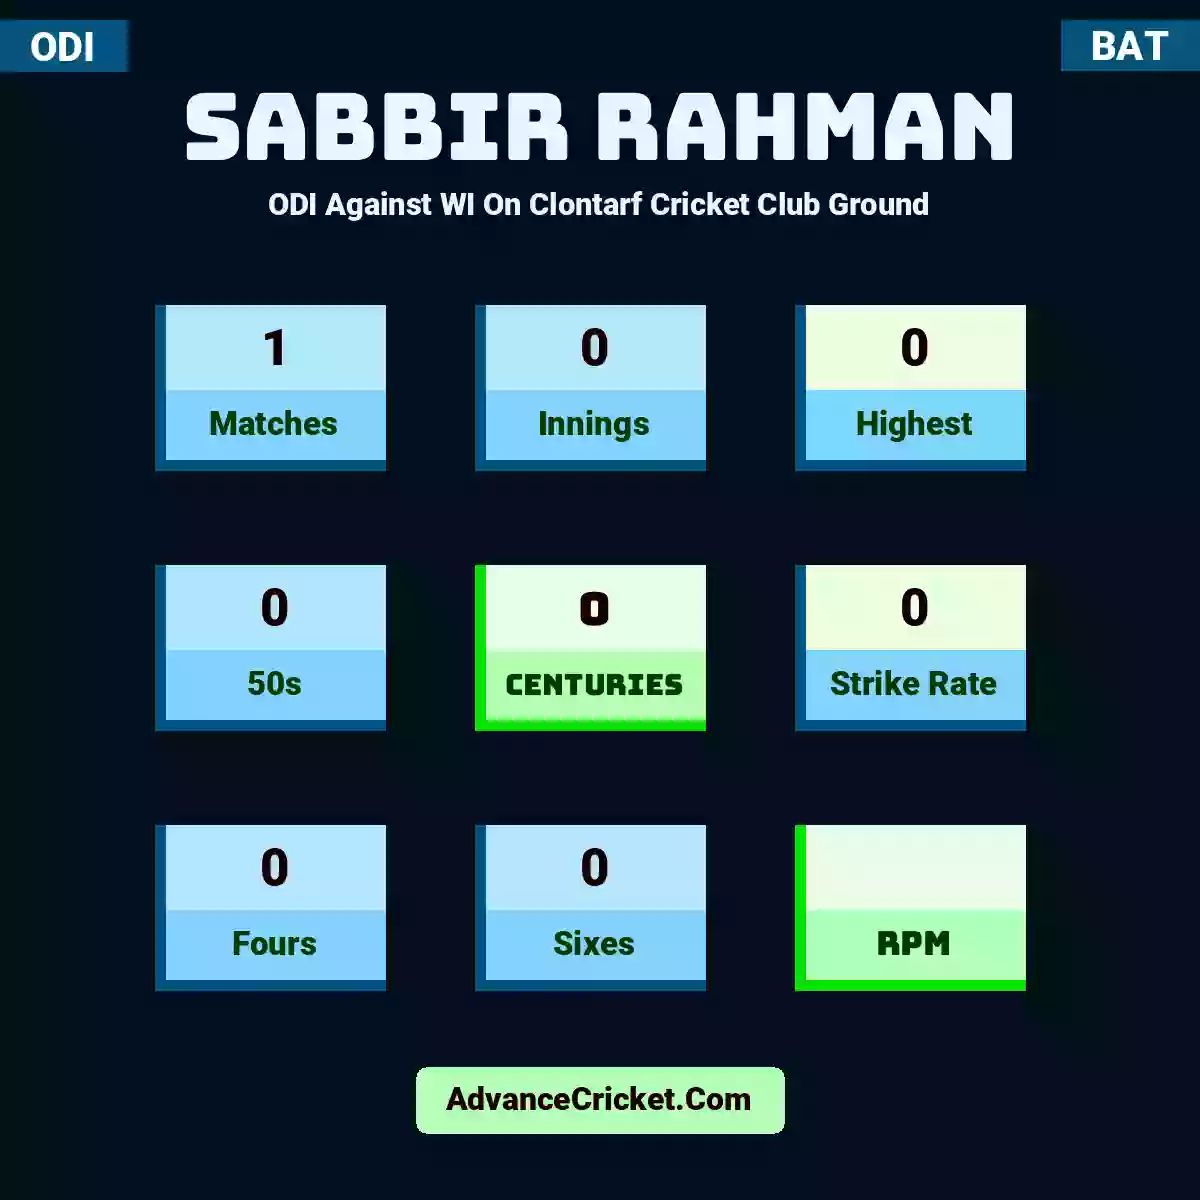 Sabbir Rahman ODI  Against WI On Clontarf Cricket Club Ground, Sabbir Rahman played 1 matches, scored 0 runs as highest, 0 half-centuries, and 0 centuries, with a strike rate of 0. S.Rahman hit 0 fours and 0 sixes.